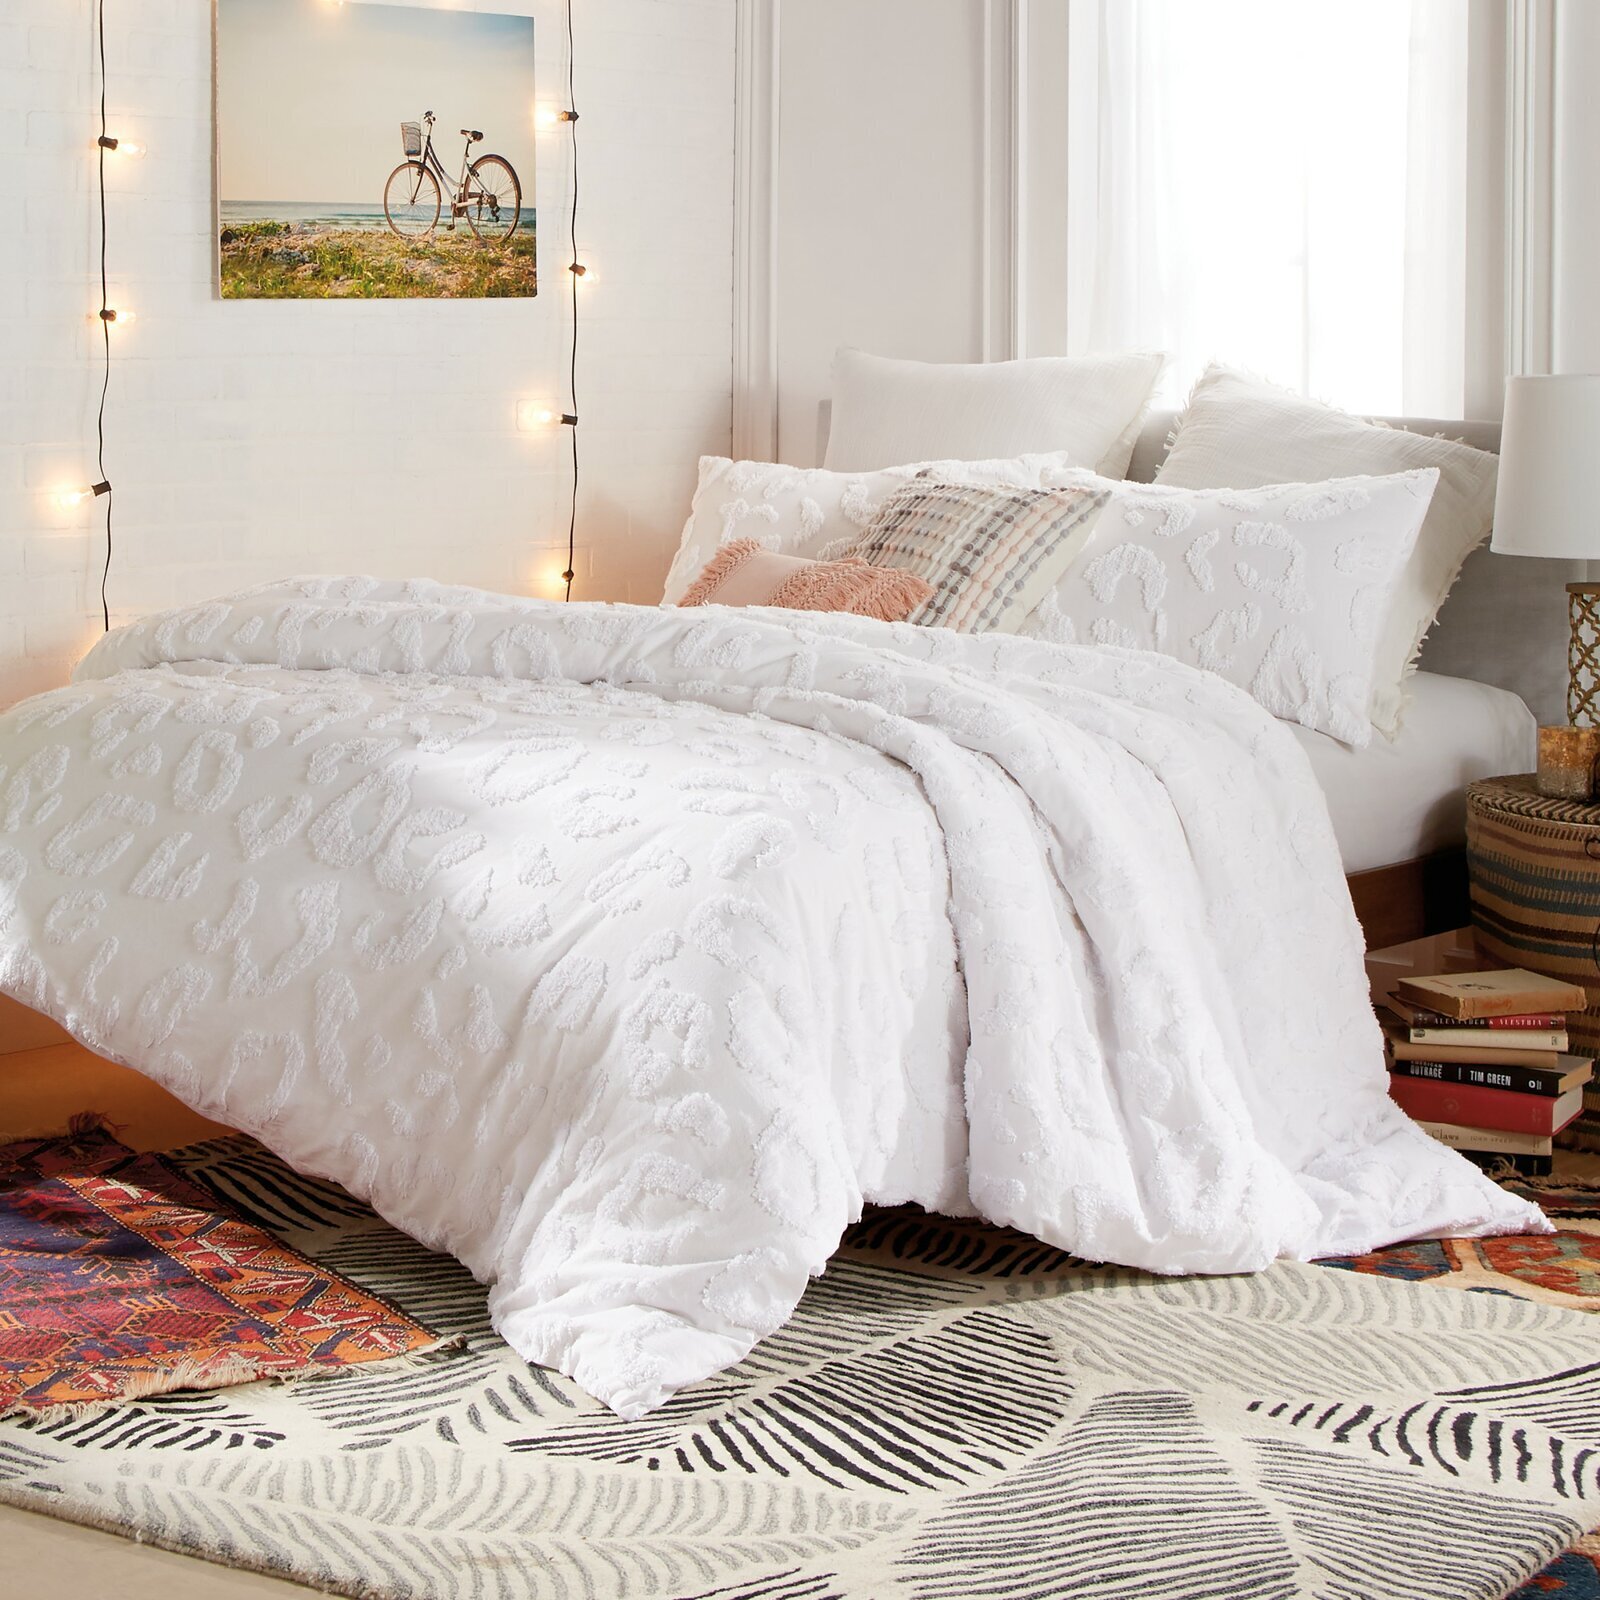 Leopard Print Queen Comforter Sets - Ideas on Foter